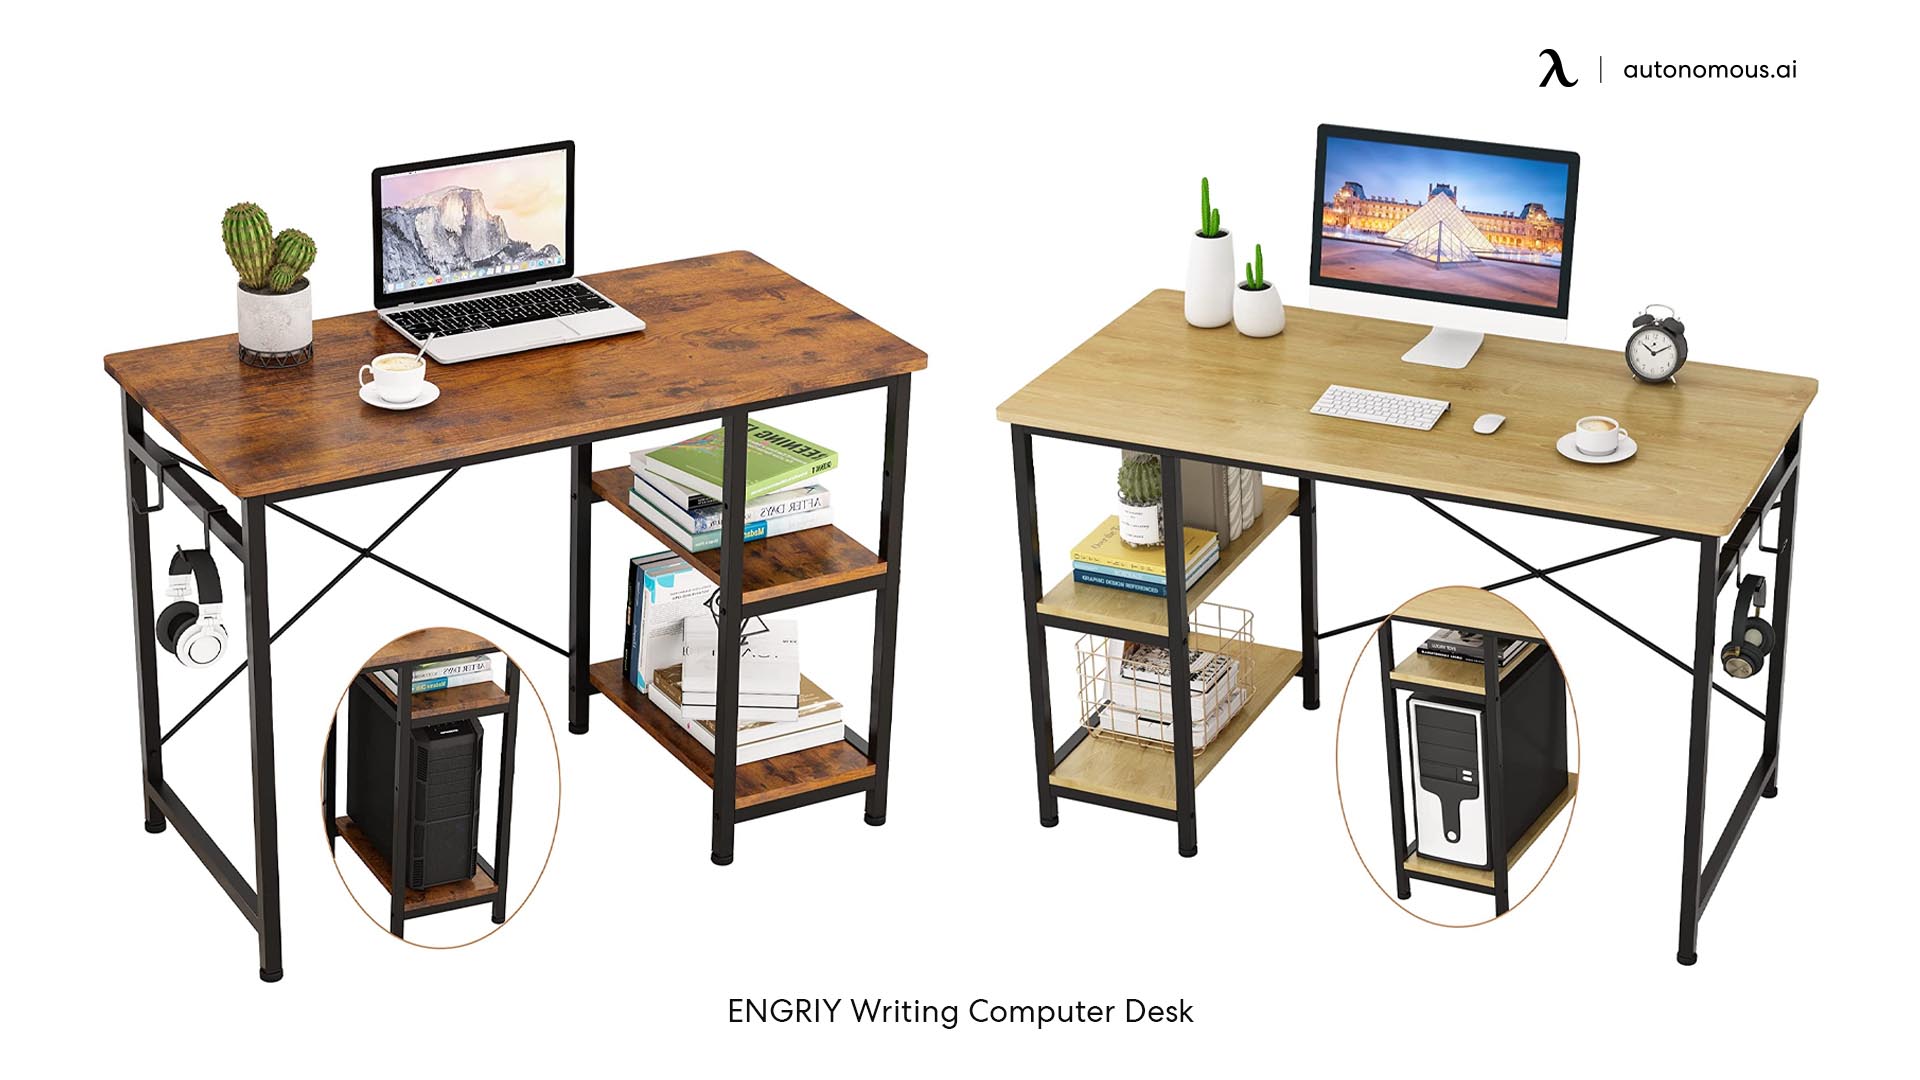 ENGRIY Writing Computer Desk